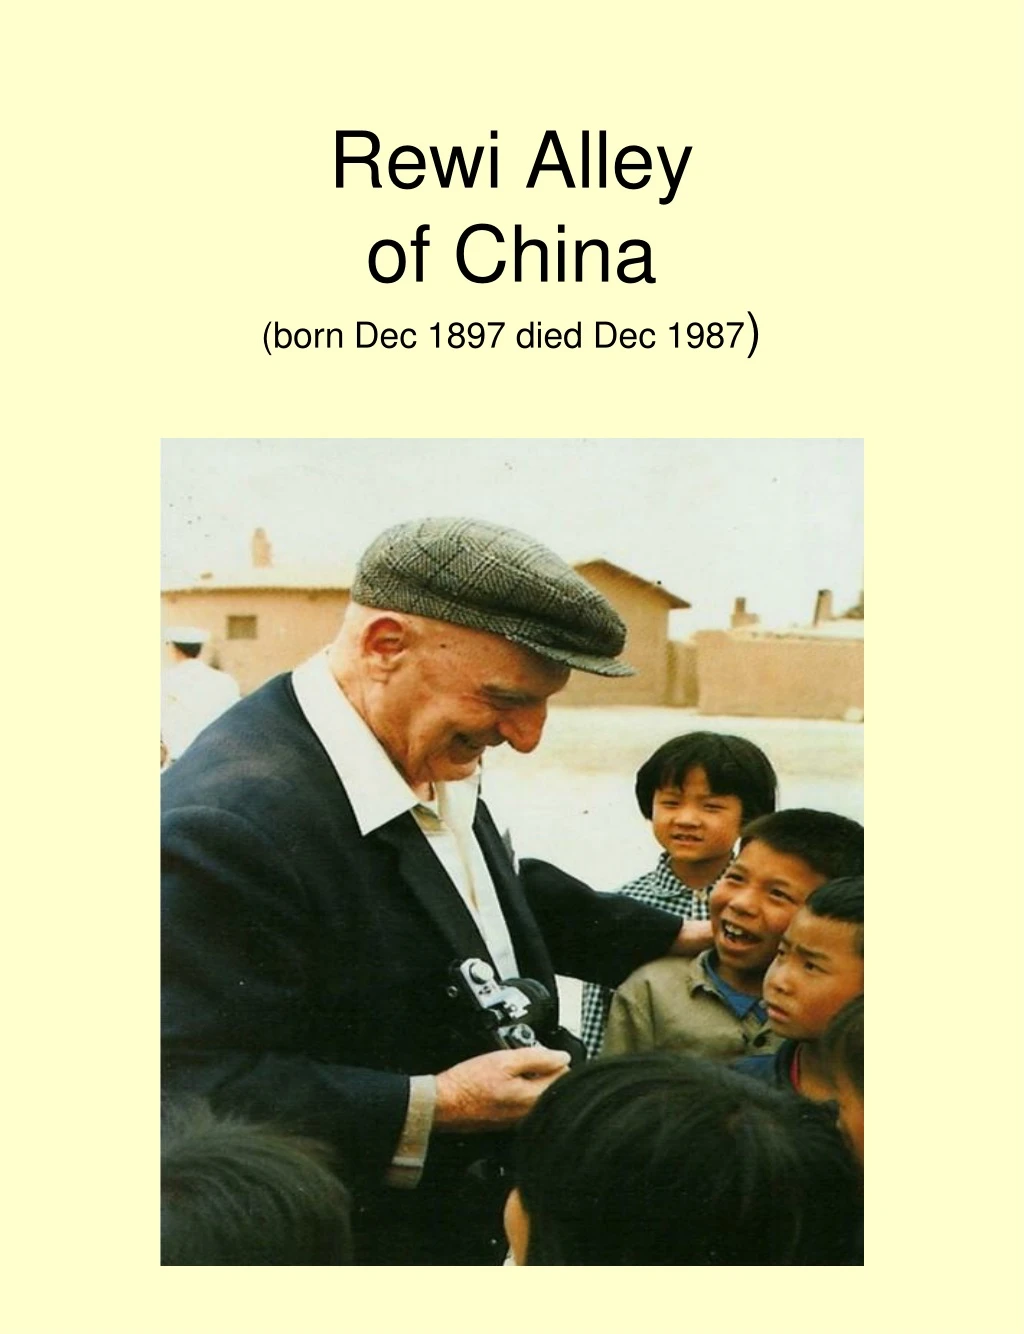 rewi alley of china born dec 1897 died dec 1987